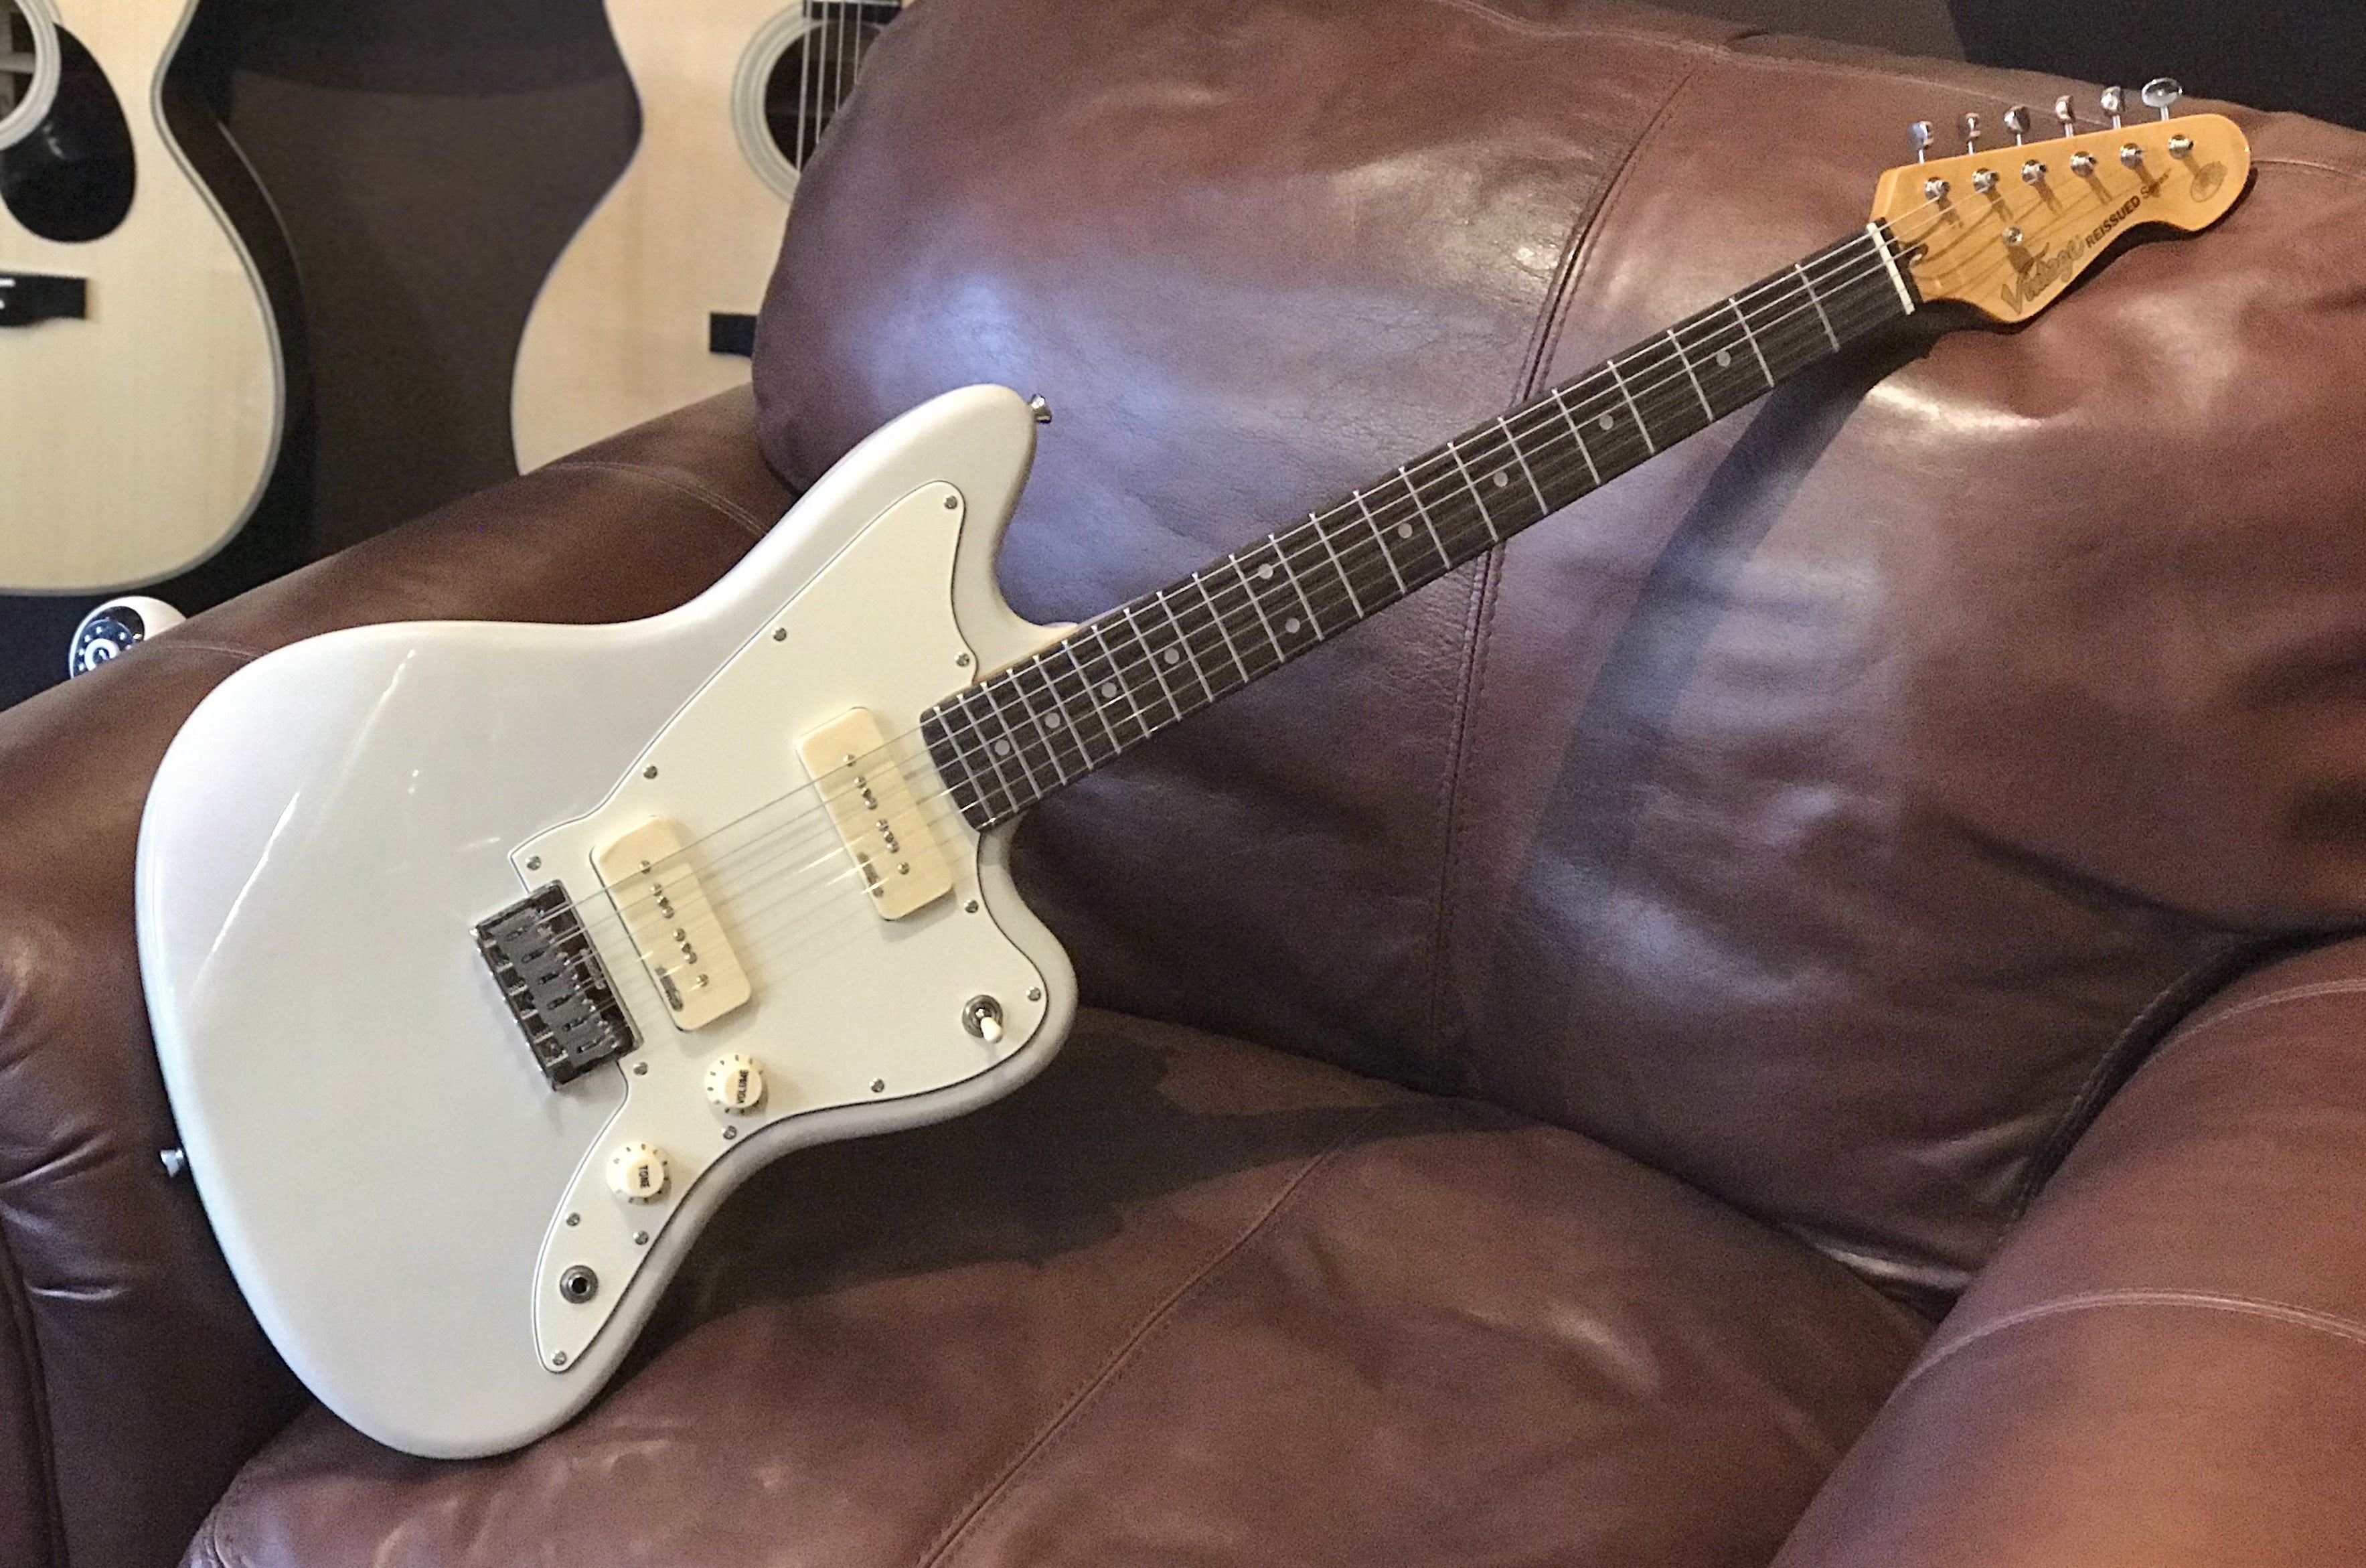 Vintage V65 Hard Tail White Blonde, Electric Guitar for sale at Richards Guitars.